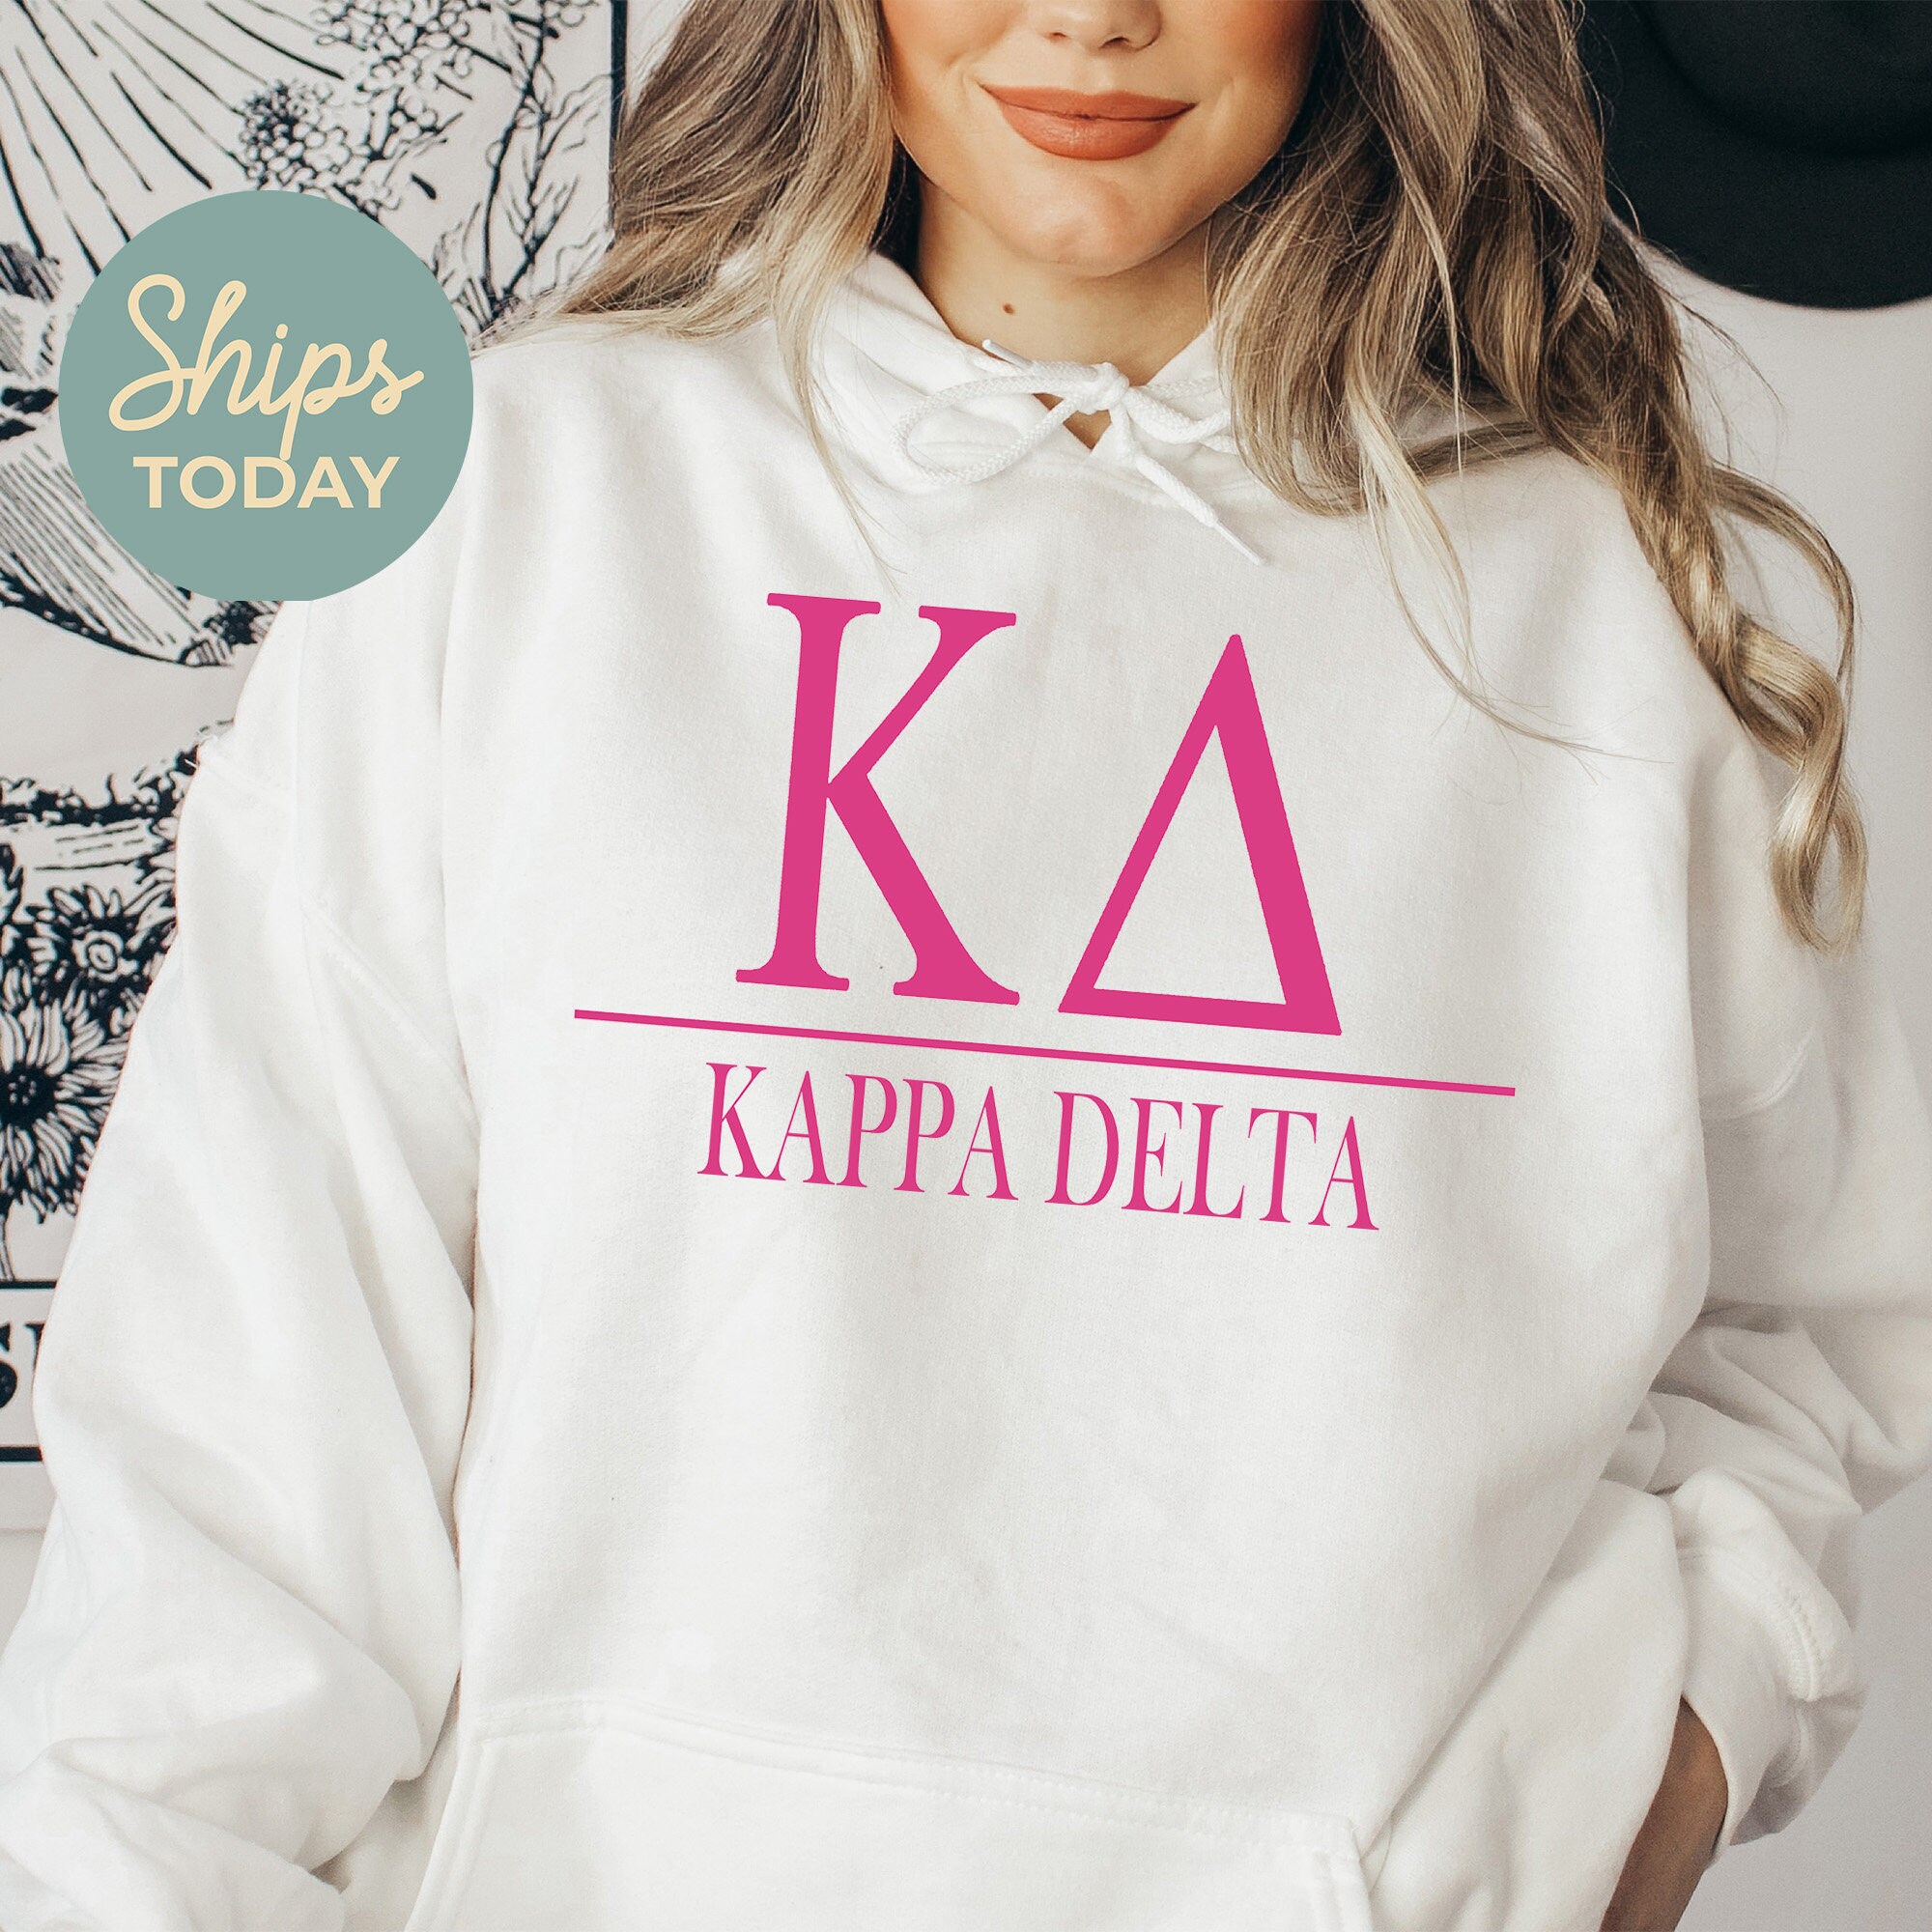 Kappa Delta Chi Collegiate Embroidered Backpack — GreekU